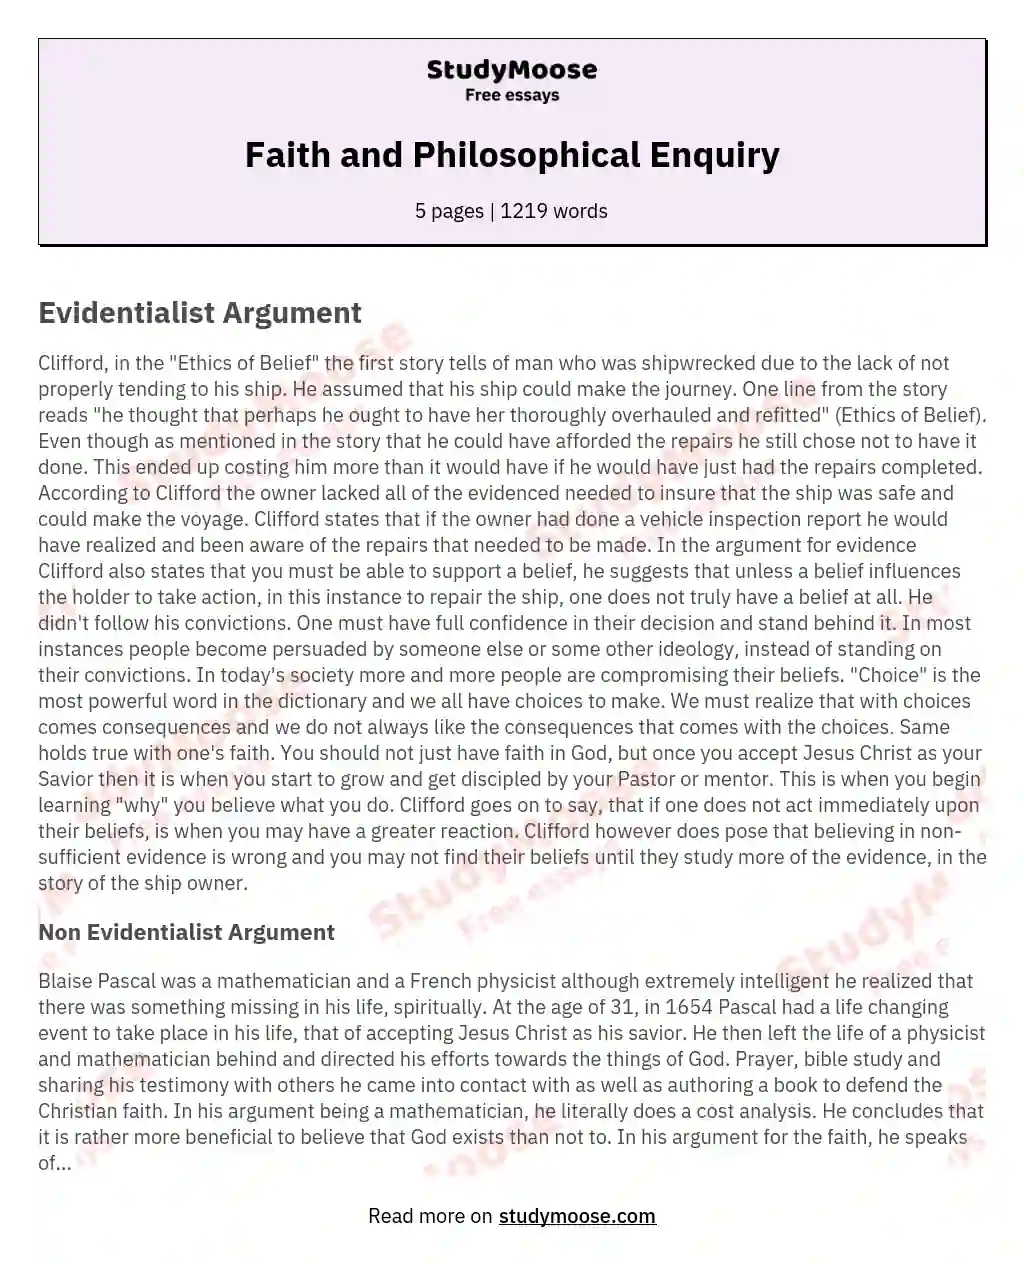 Faith and Philosophical Enquiry essay